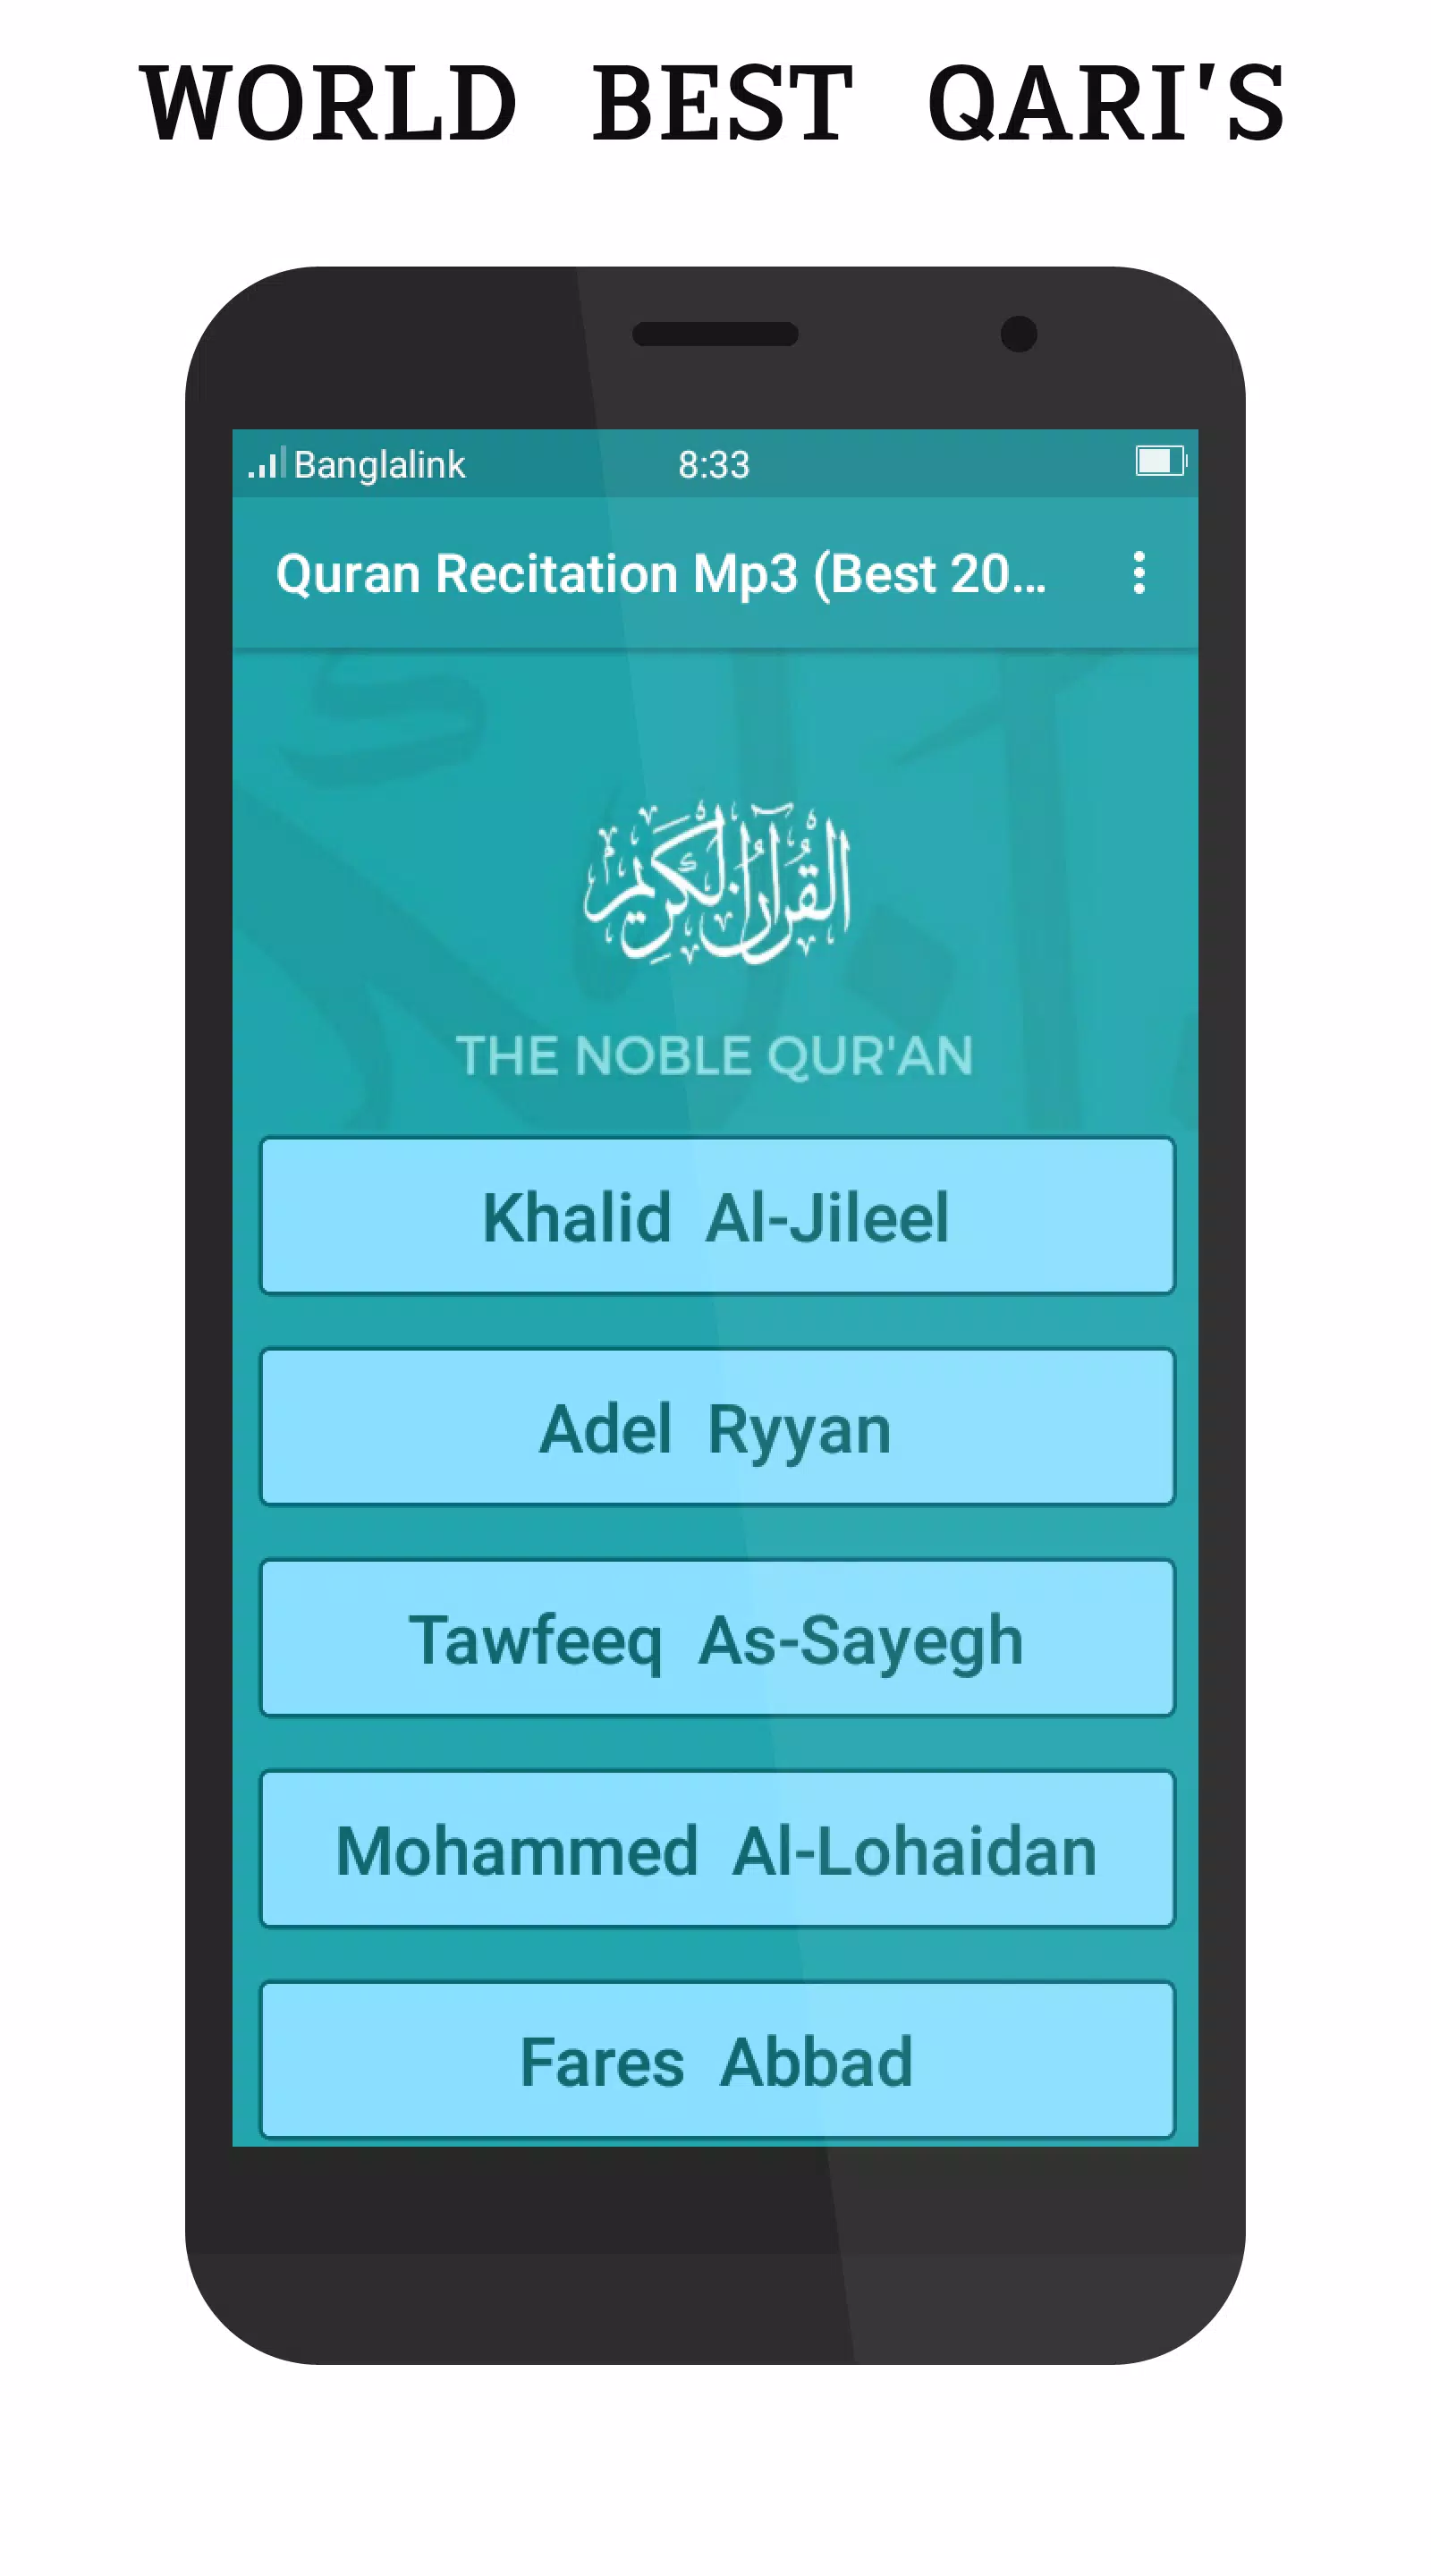 Quran Recitation Mp3 (Best 20 Reciters Voices) for Android - APK Download